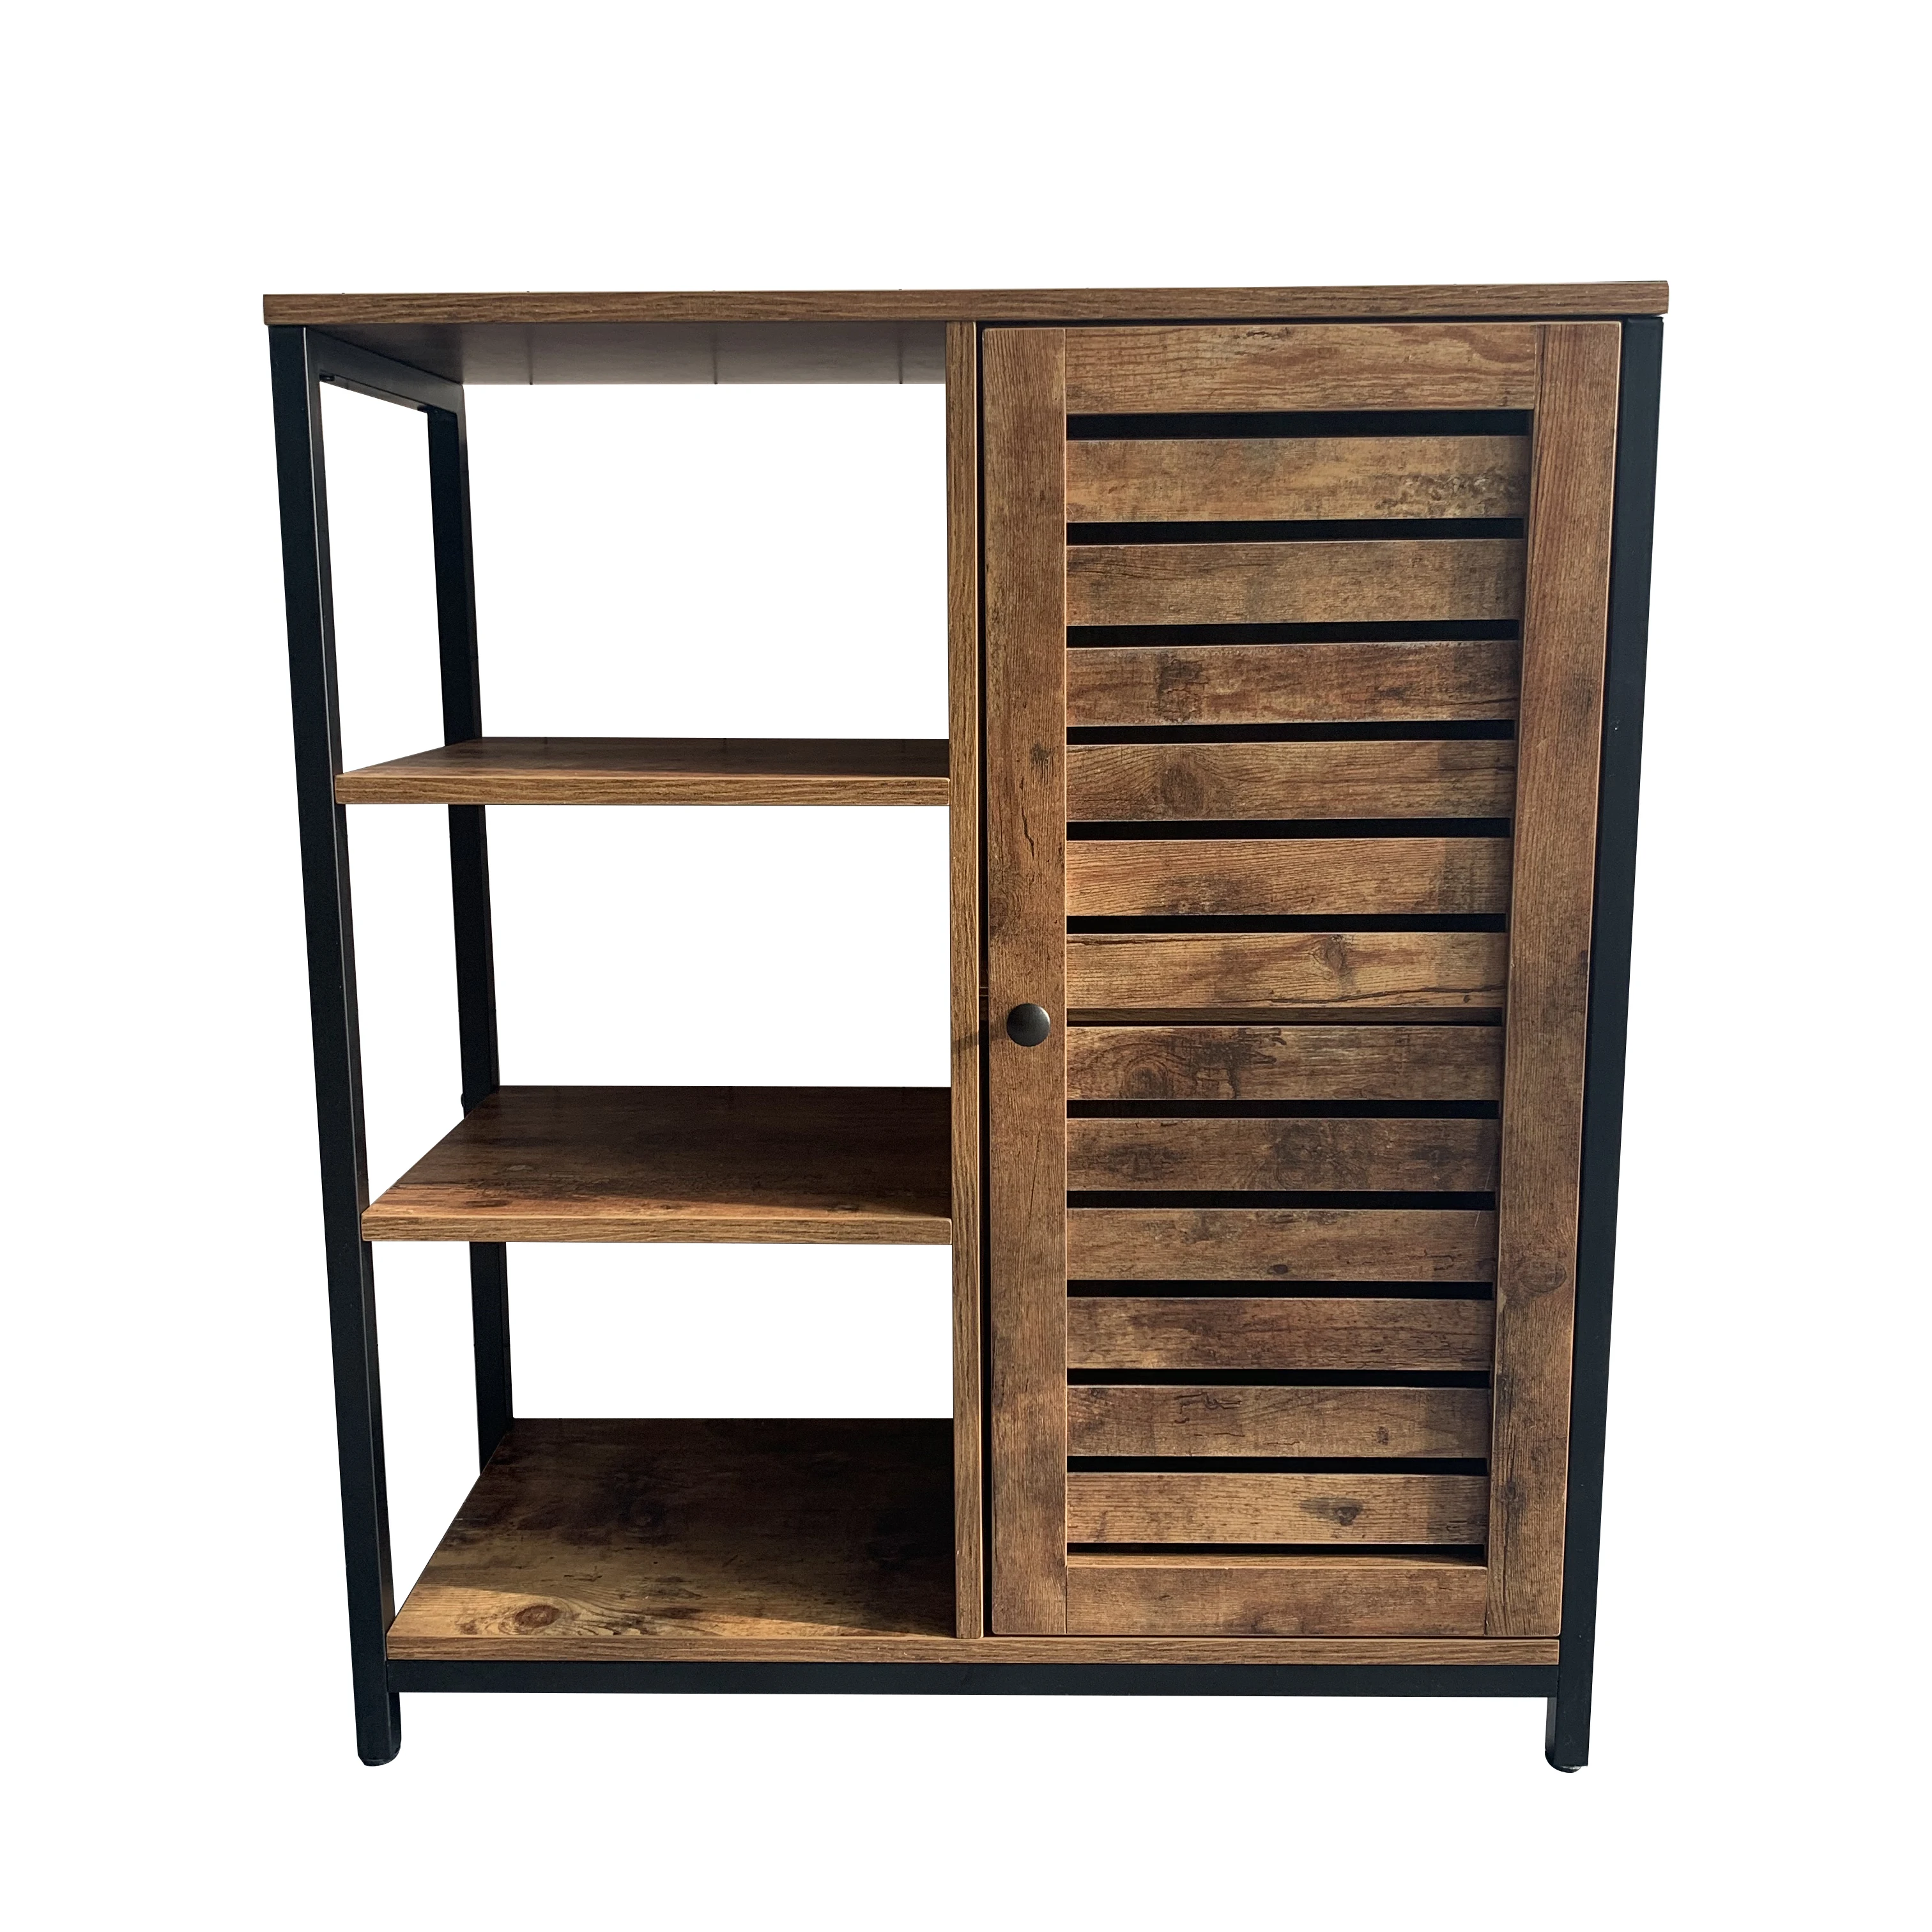 2020 new Industrial Rustic storage cabinet sideboard storage organizer with 3 tier shelf